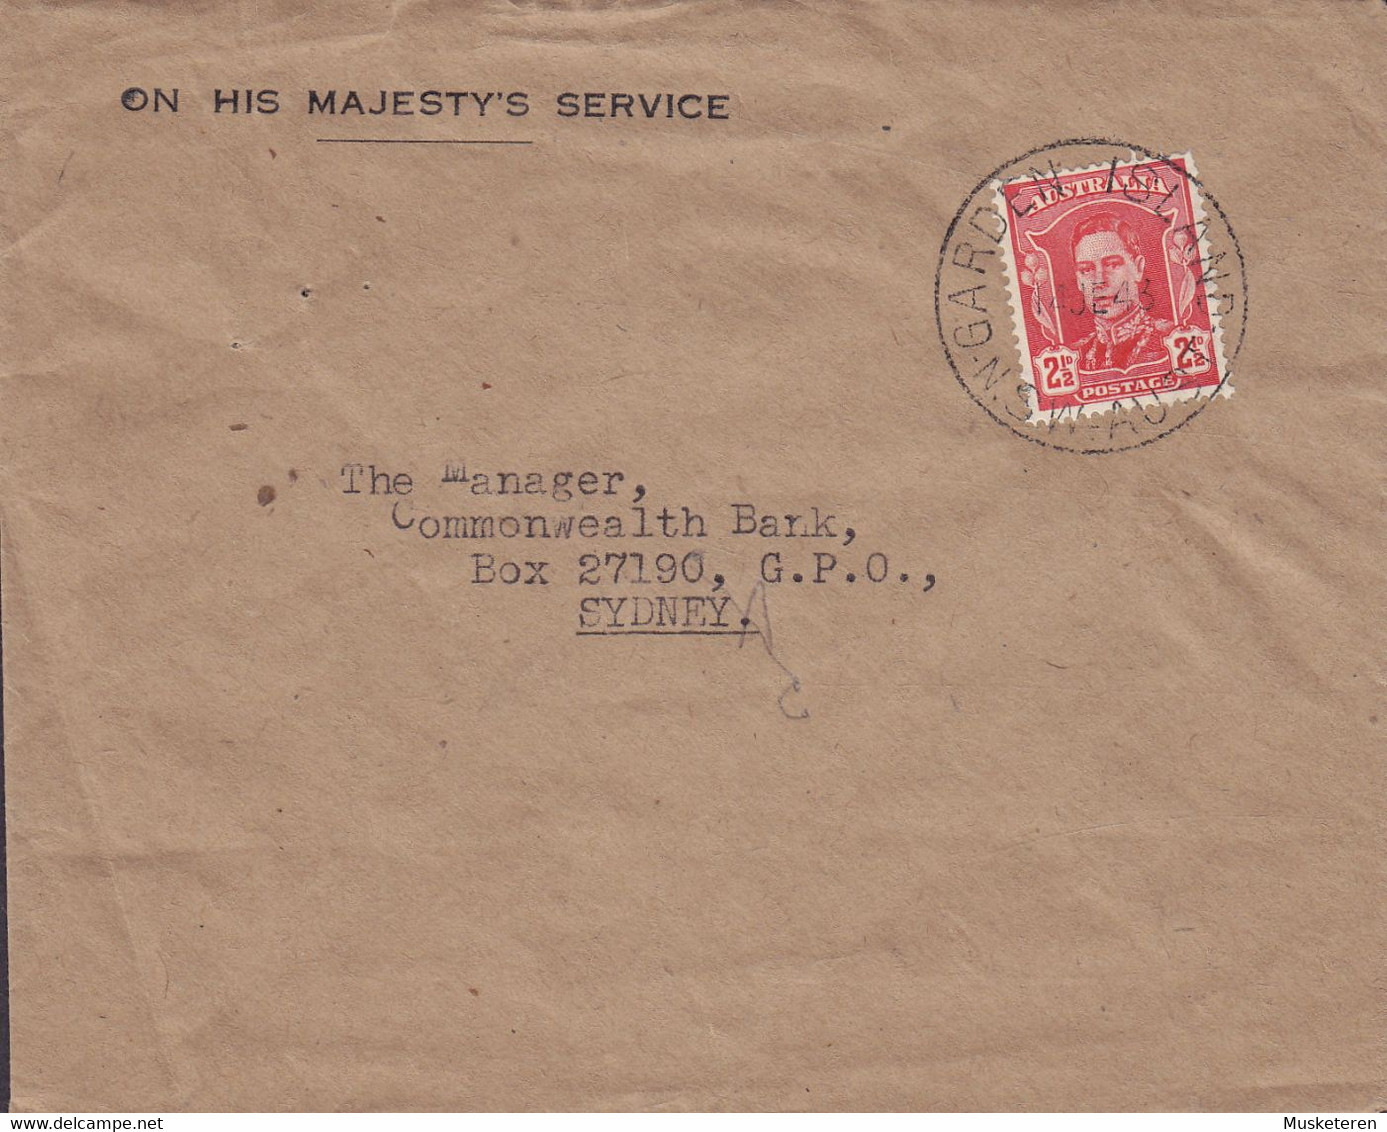 Australia ON HIS MAJESTY's SERVICE Naval Base GARDEN ISLAND 1943 Cover Brief Commonwealth Bank Of Australia SYDNEY - Dienstmarken